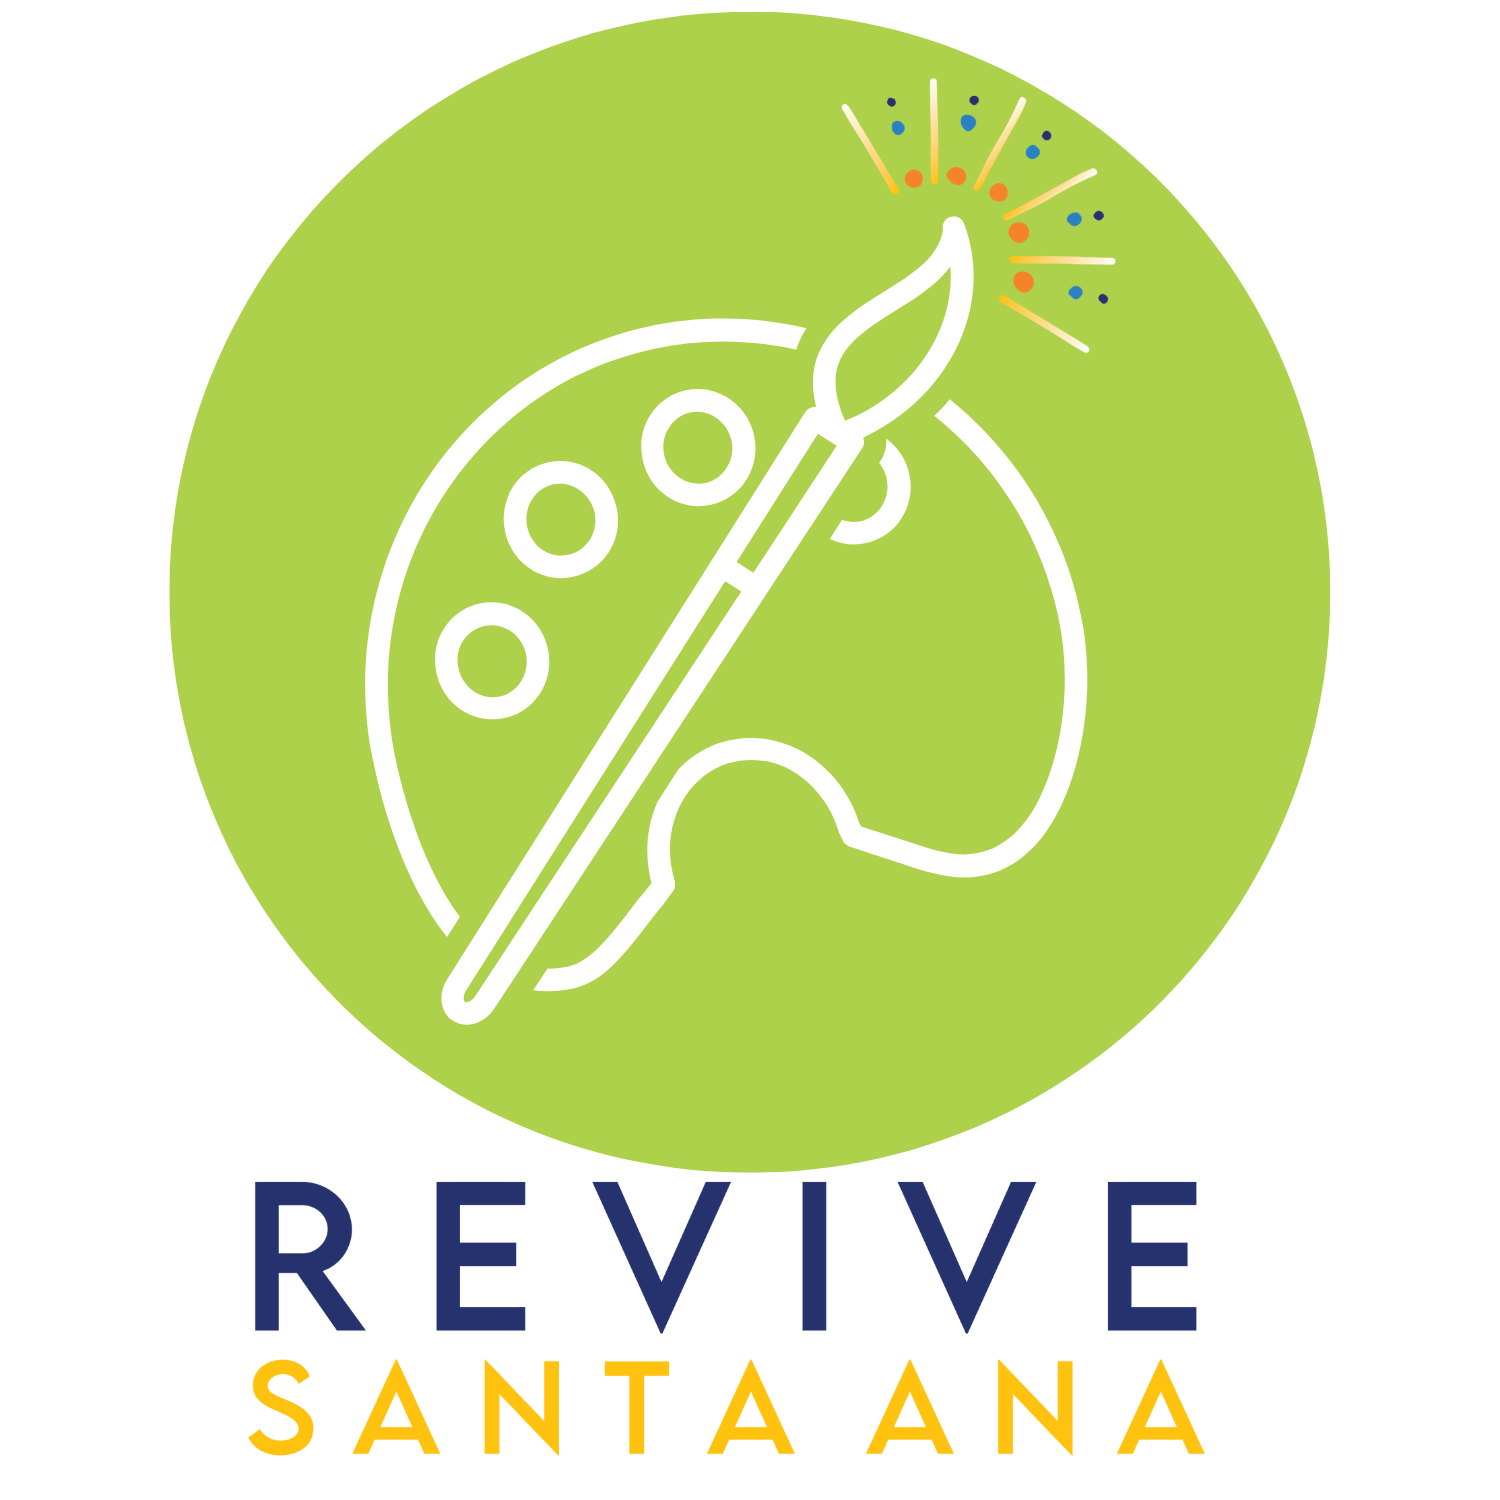 June 9 Backhausdance Revive Santa Ana Logos ArtsCulture LOGO